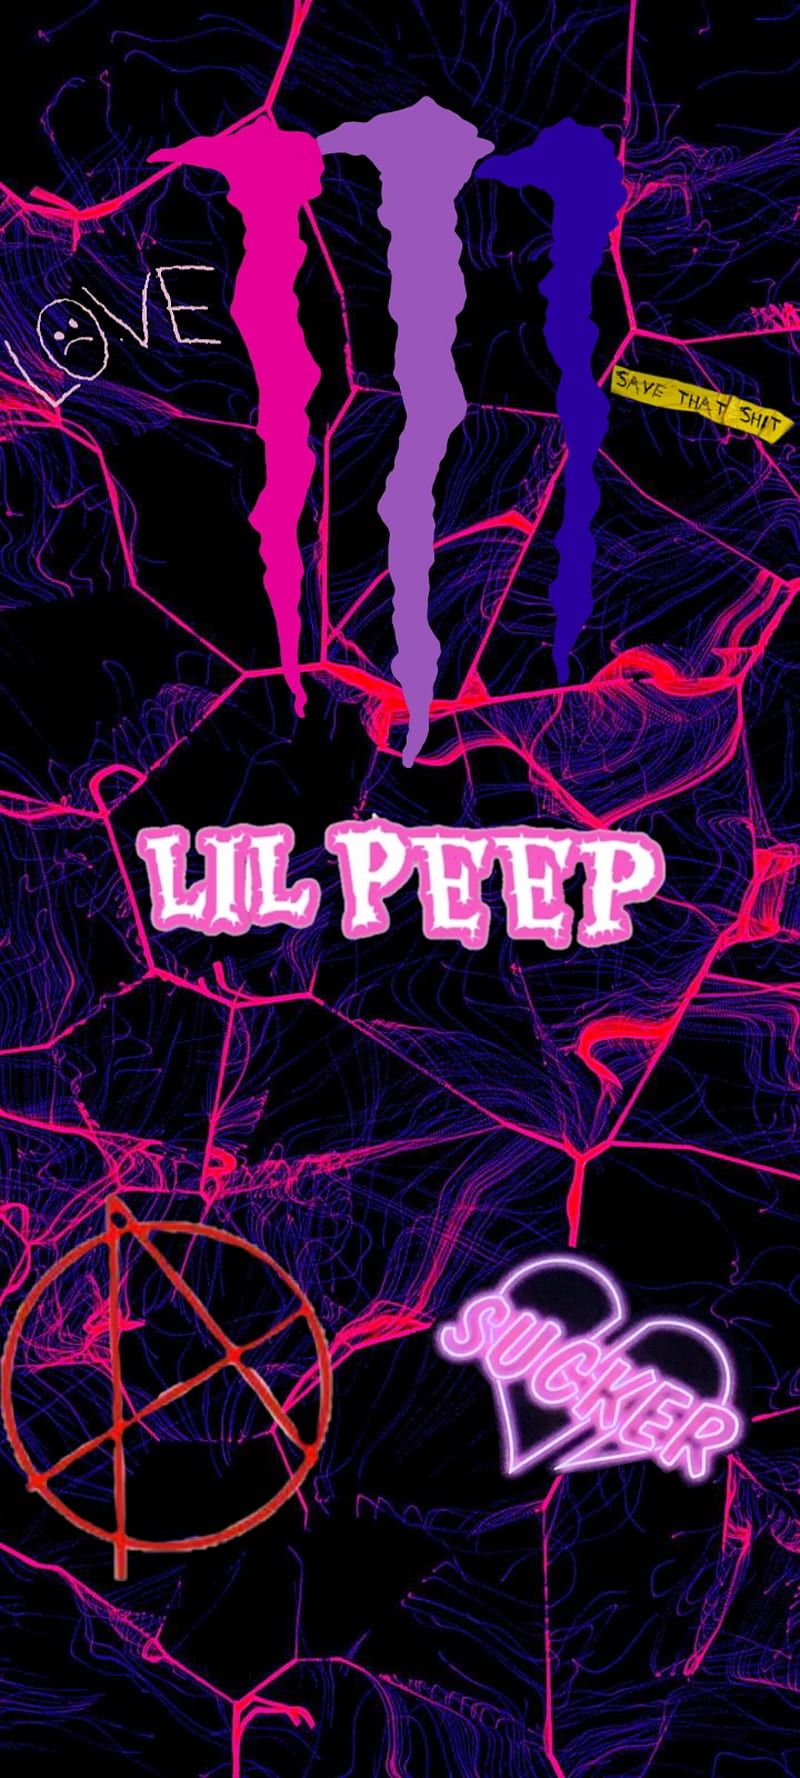 Lil peep wallpaper for phone or desktop background. lil peep - Lil Peep